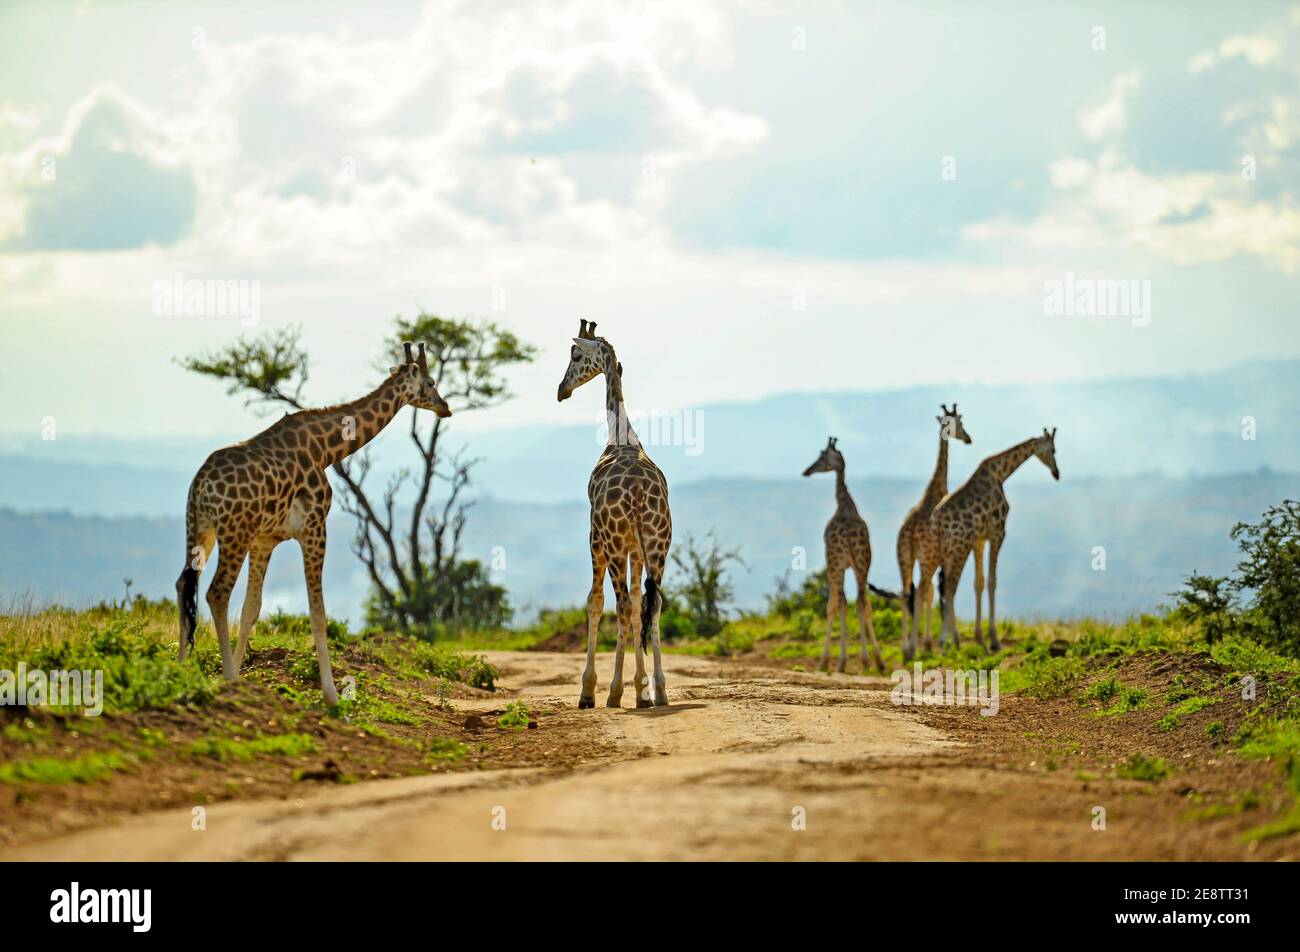 Wild Giraffes roam freely in the Murchison Game reserve in Uganda. Africa. Stock Photo